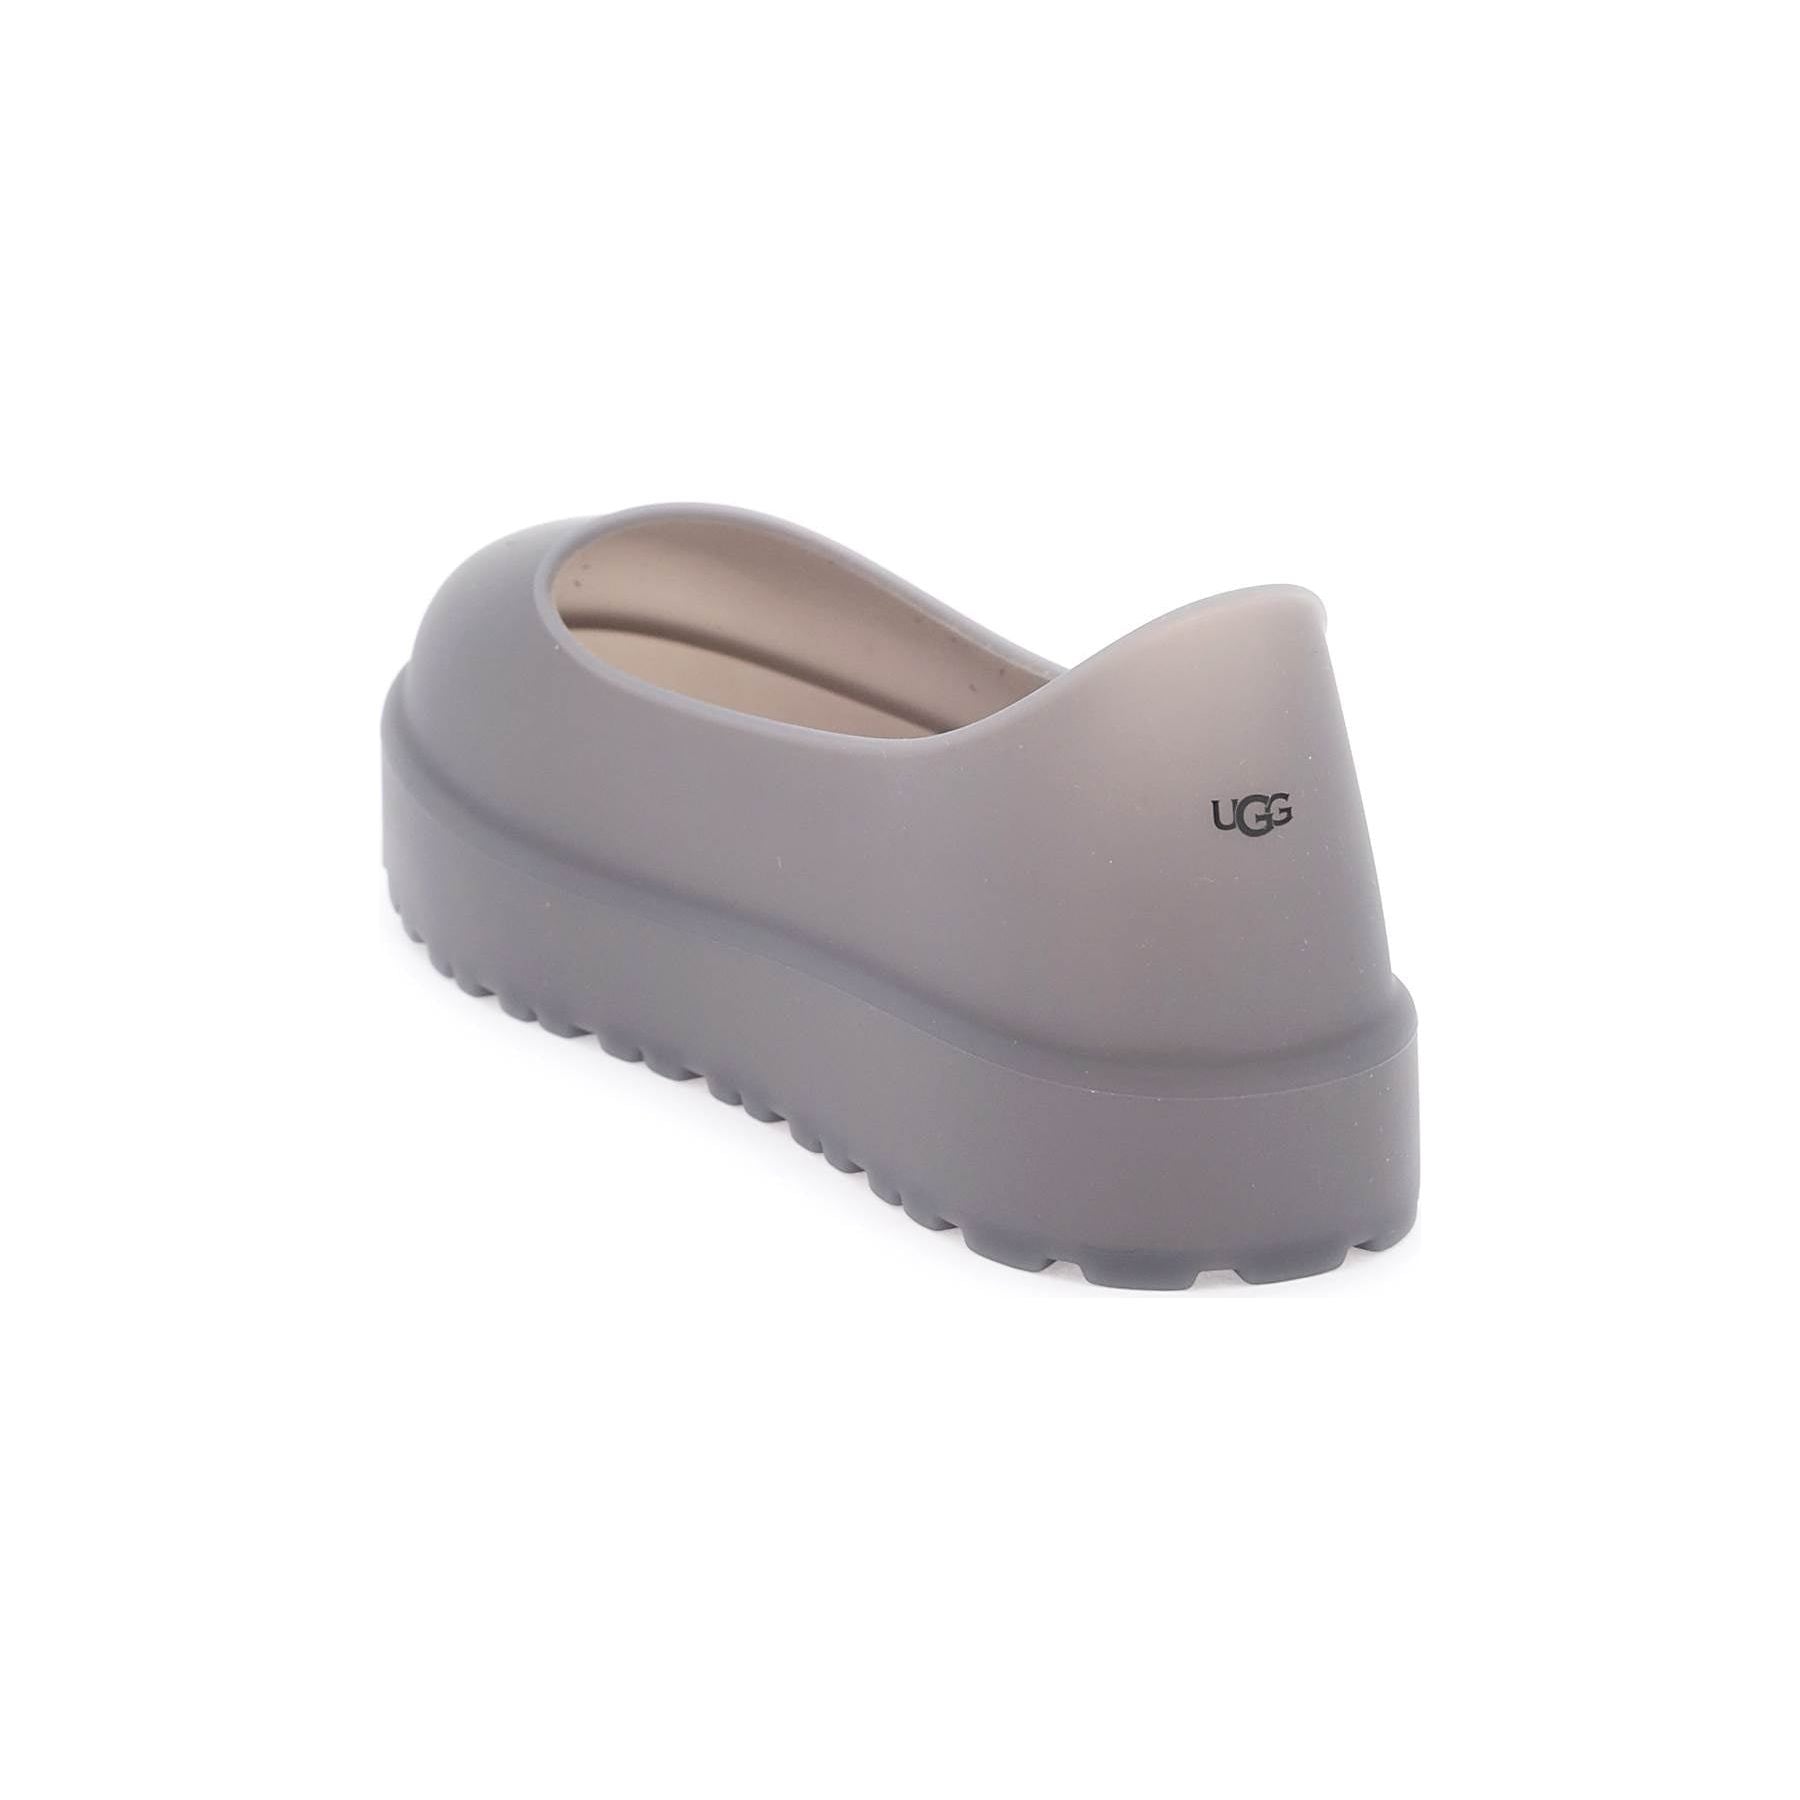 UGGguard Shoe Protection